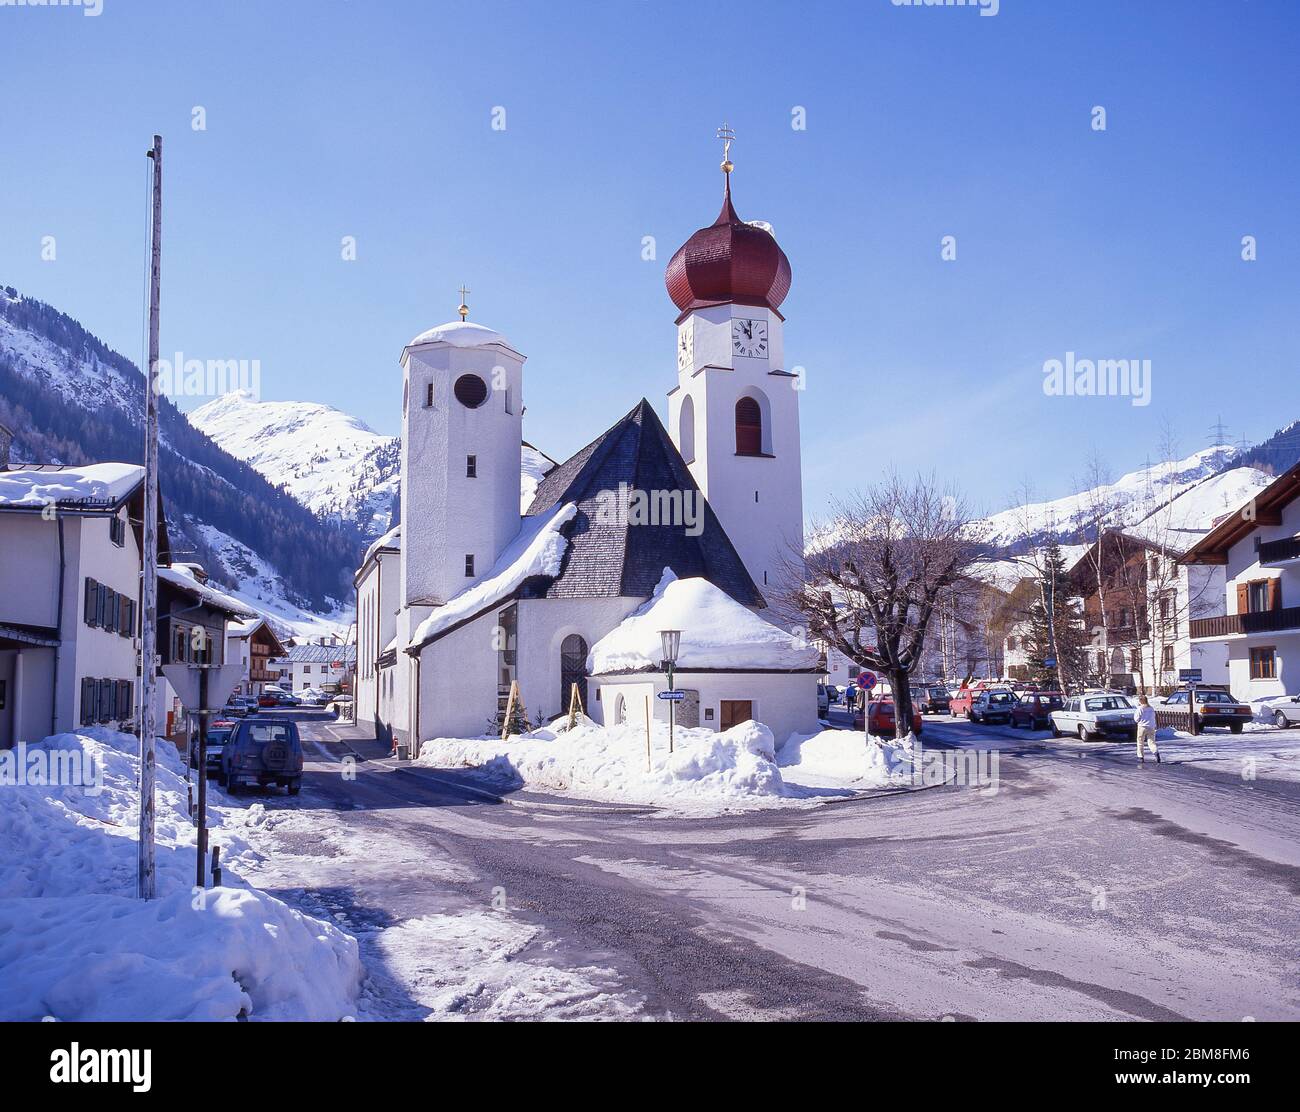 Pfarrkirche Sankt Anton am Arlberg, St.Anton (Sankt Anton am Arlberg), Tirol, Austria Foto de stock